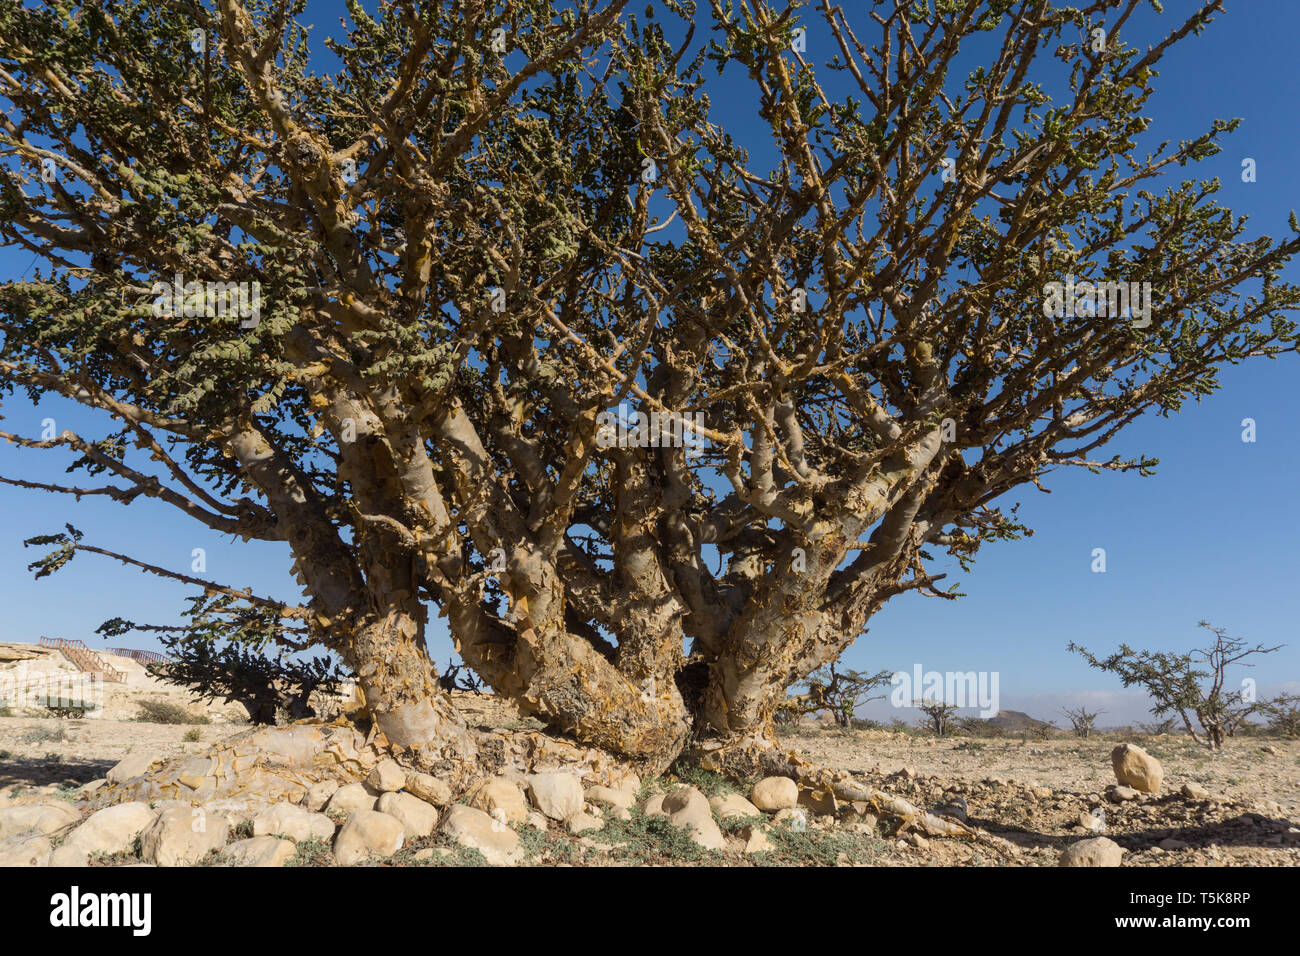 Frankincense tree, Salalah, Dhorfar, Oman Stock Photo